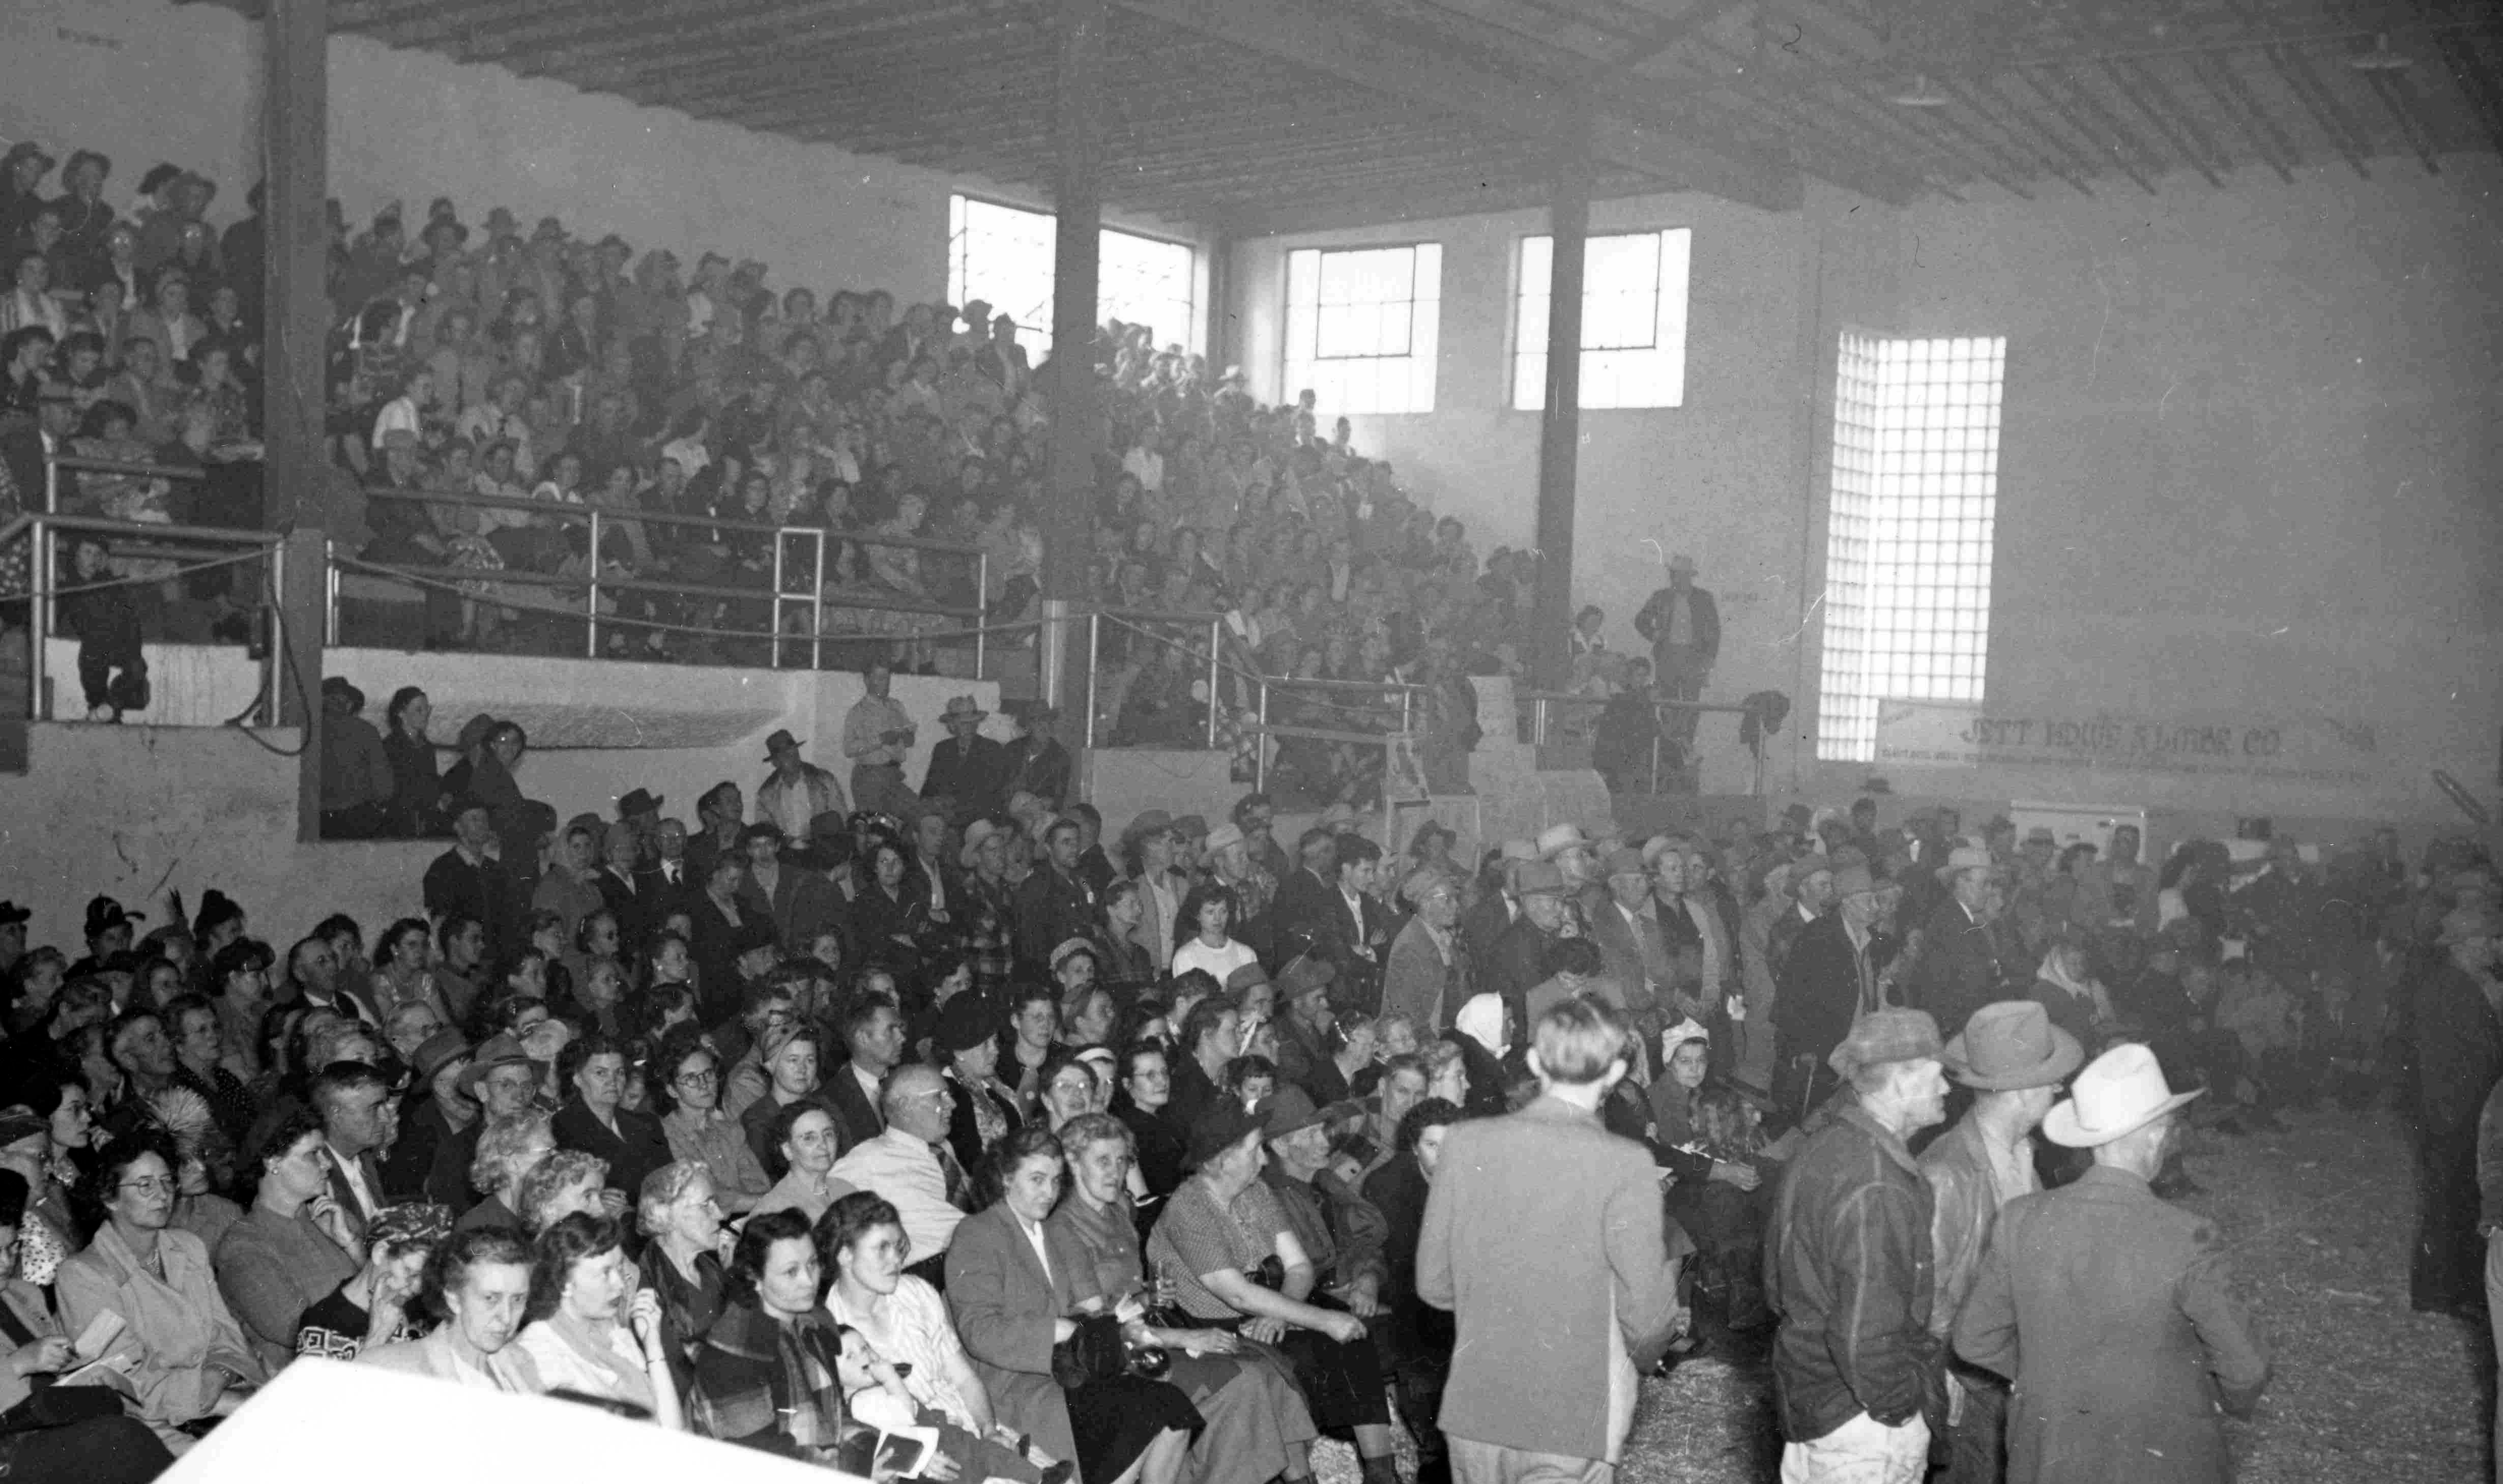 1950's EEA Annual Meeting